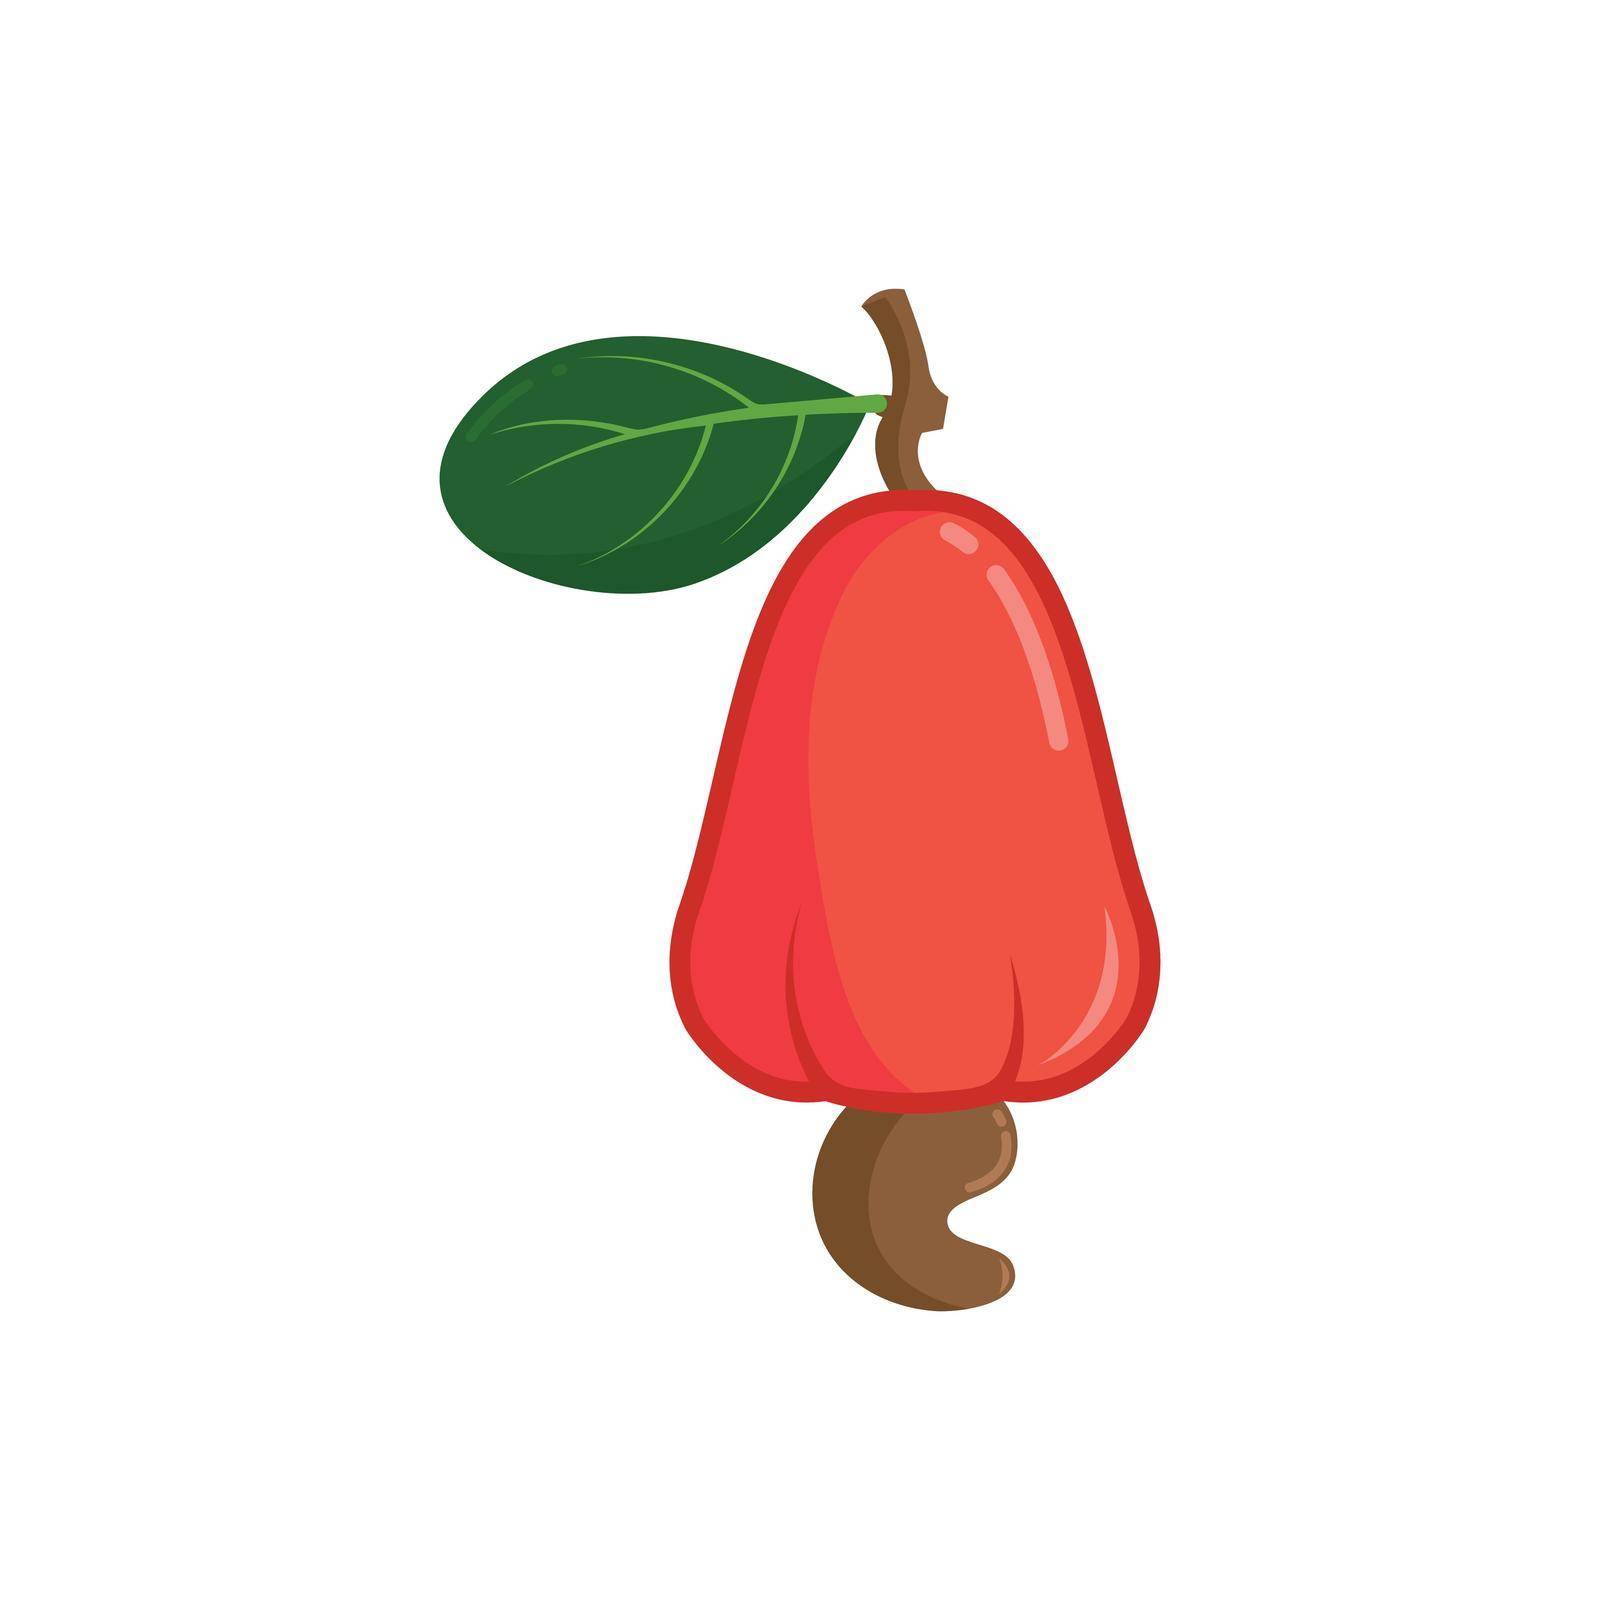 cashew nut vector illustration concept design by idan